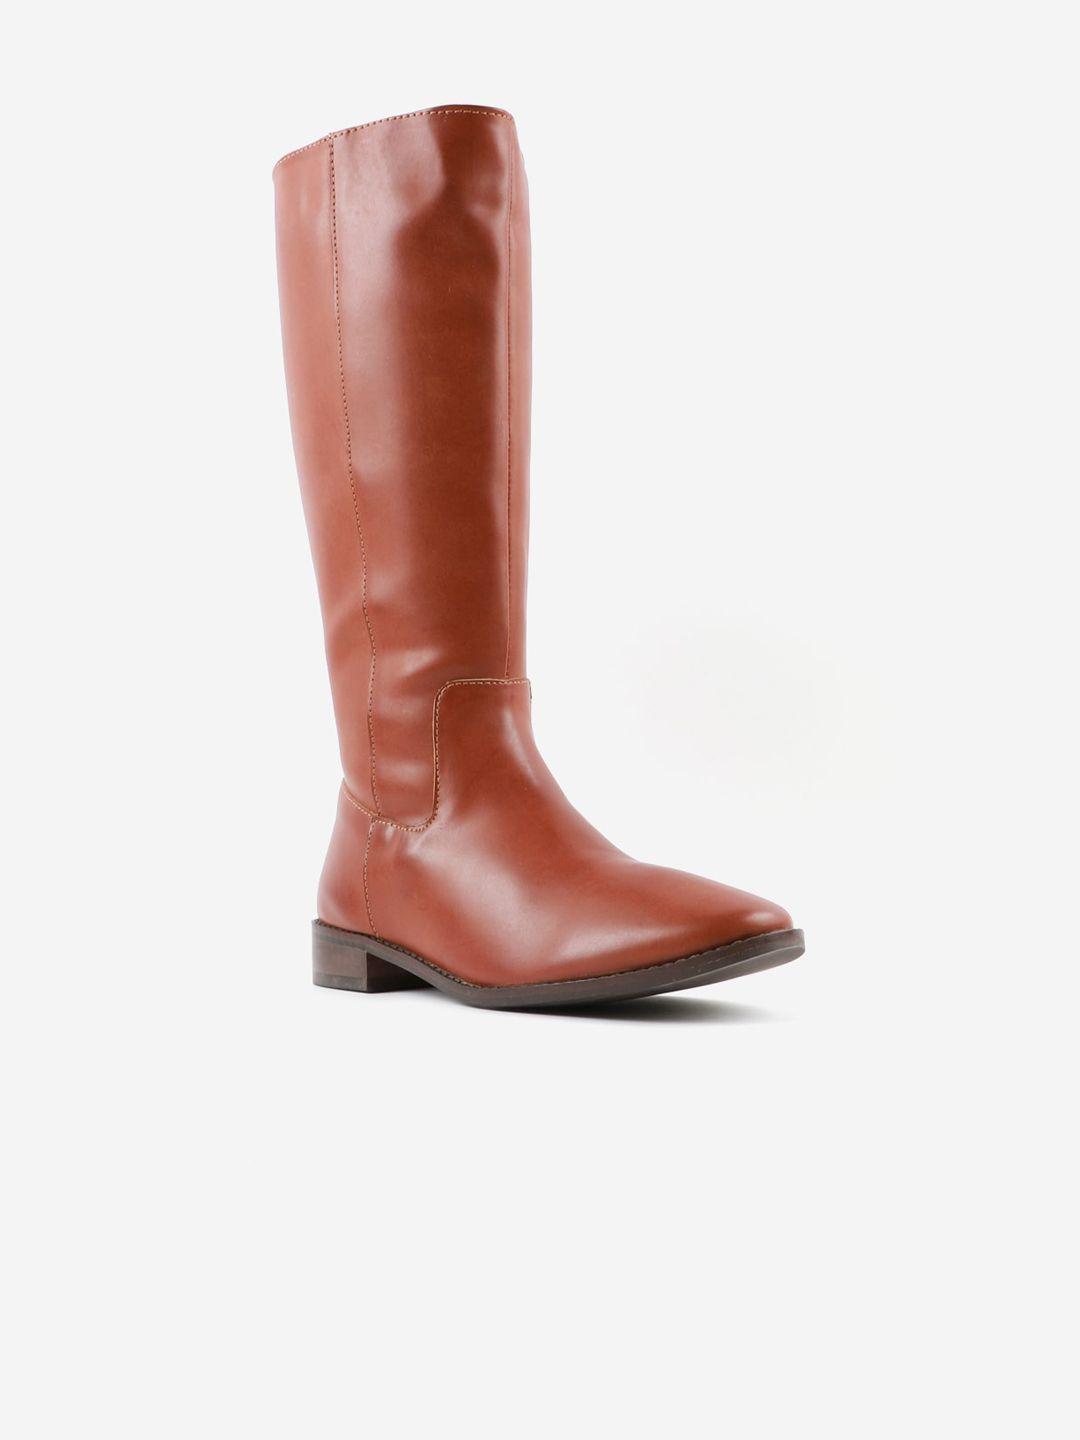 carlton london women tan brown high-top flat boots